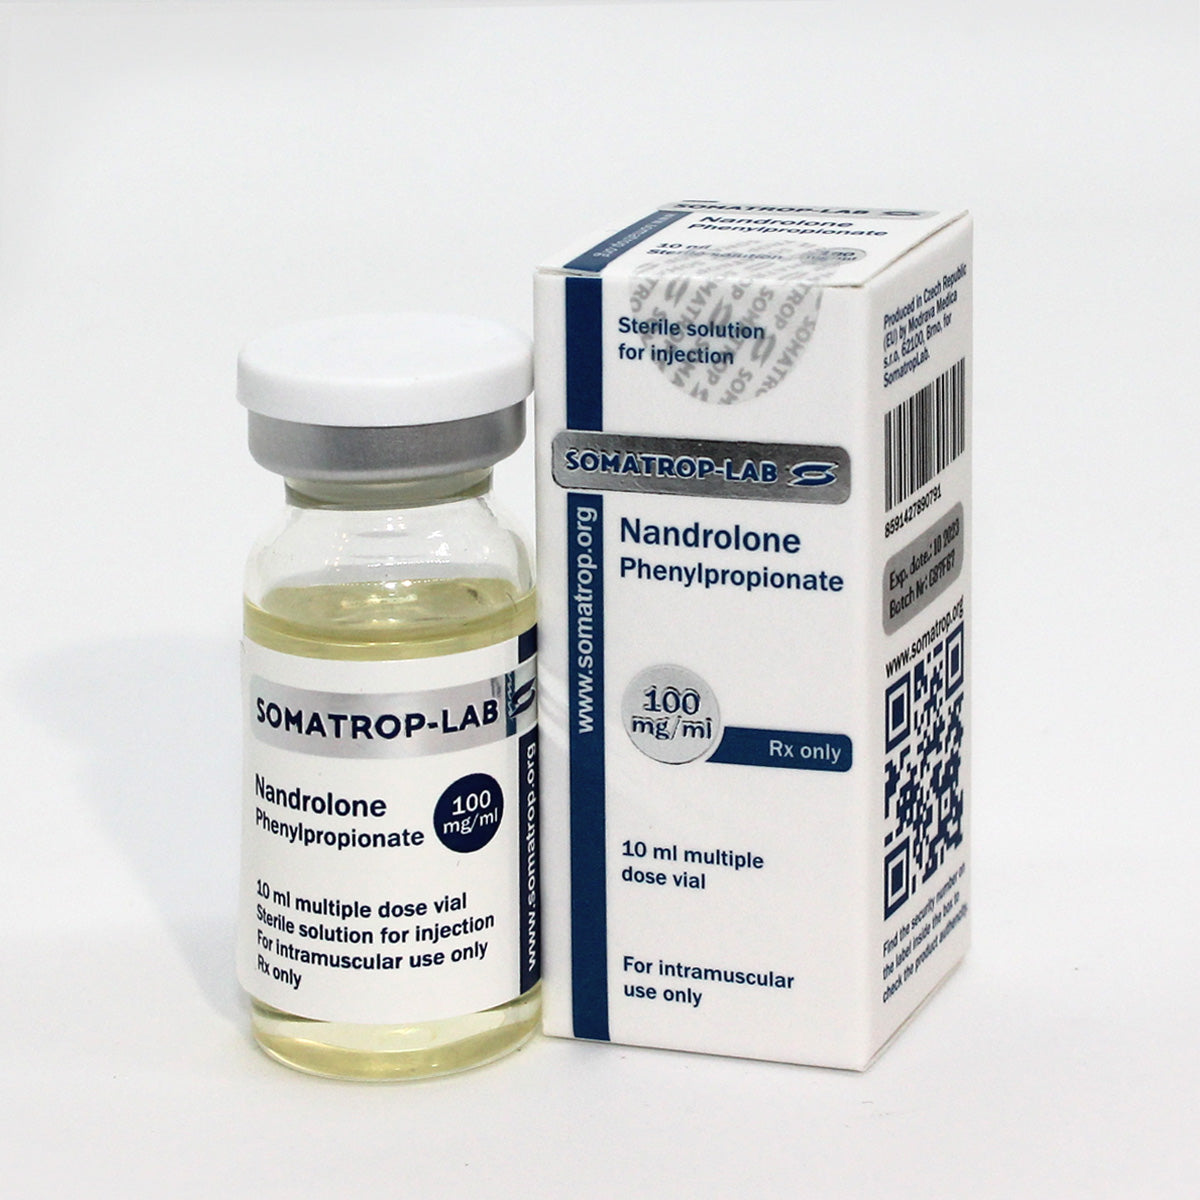 Somatrop-Lab Nandrolone Phenylpropionate 10ml/100mg/ml front packaging.